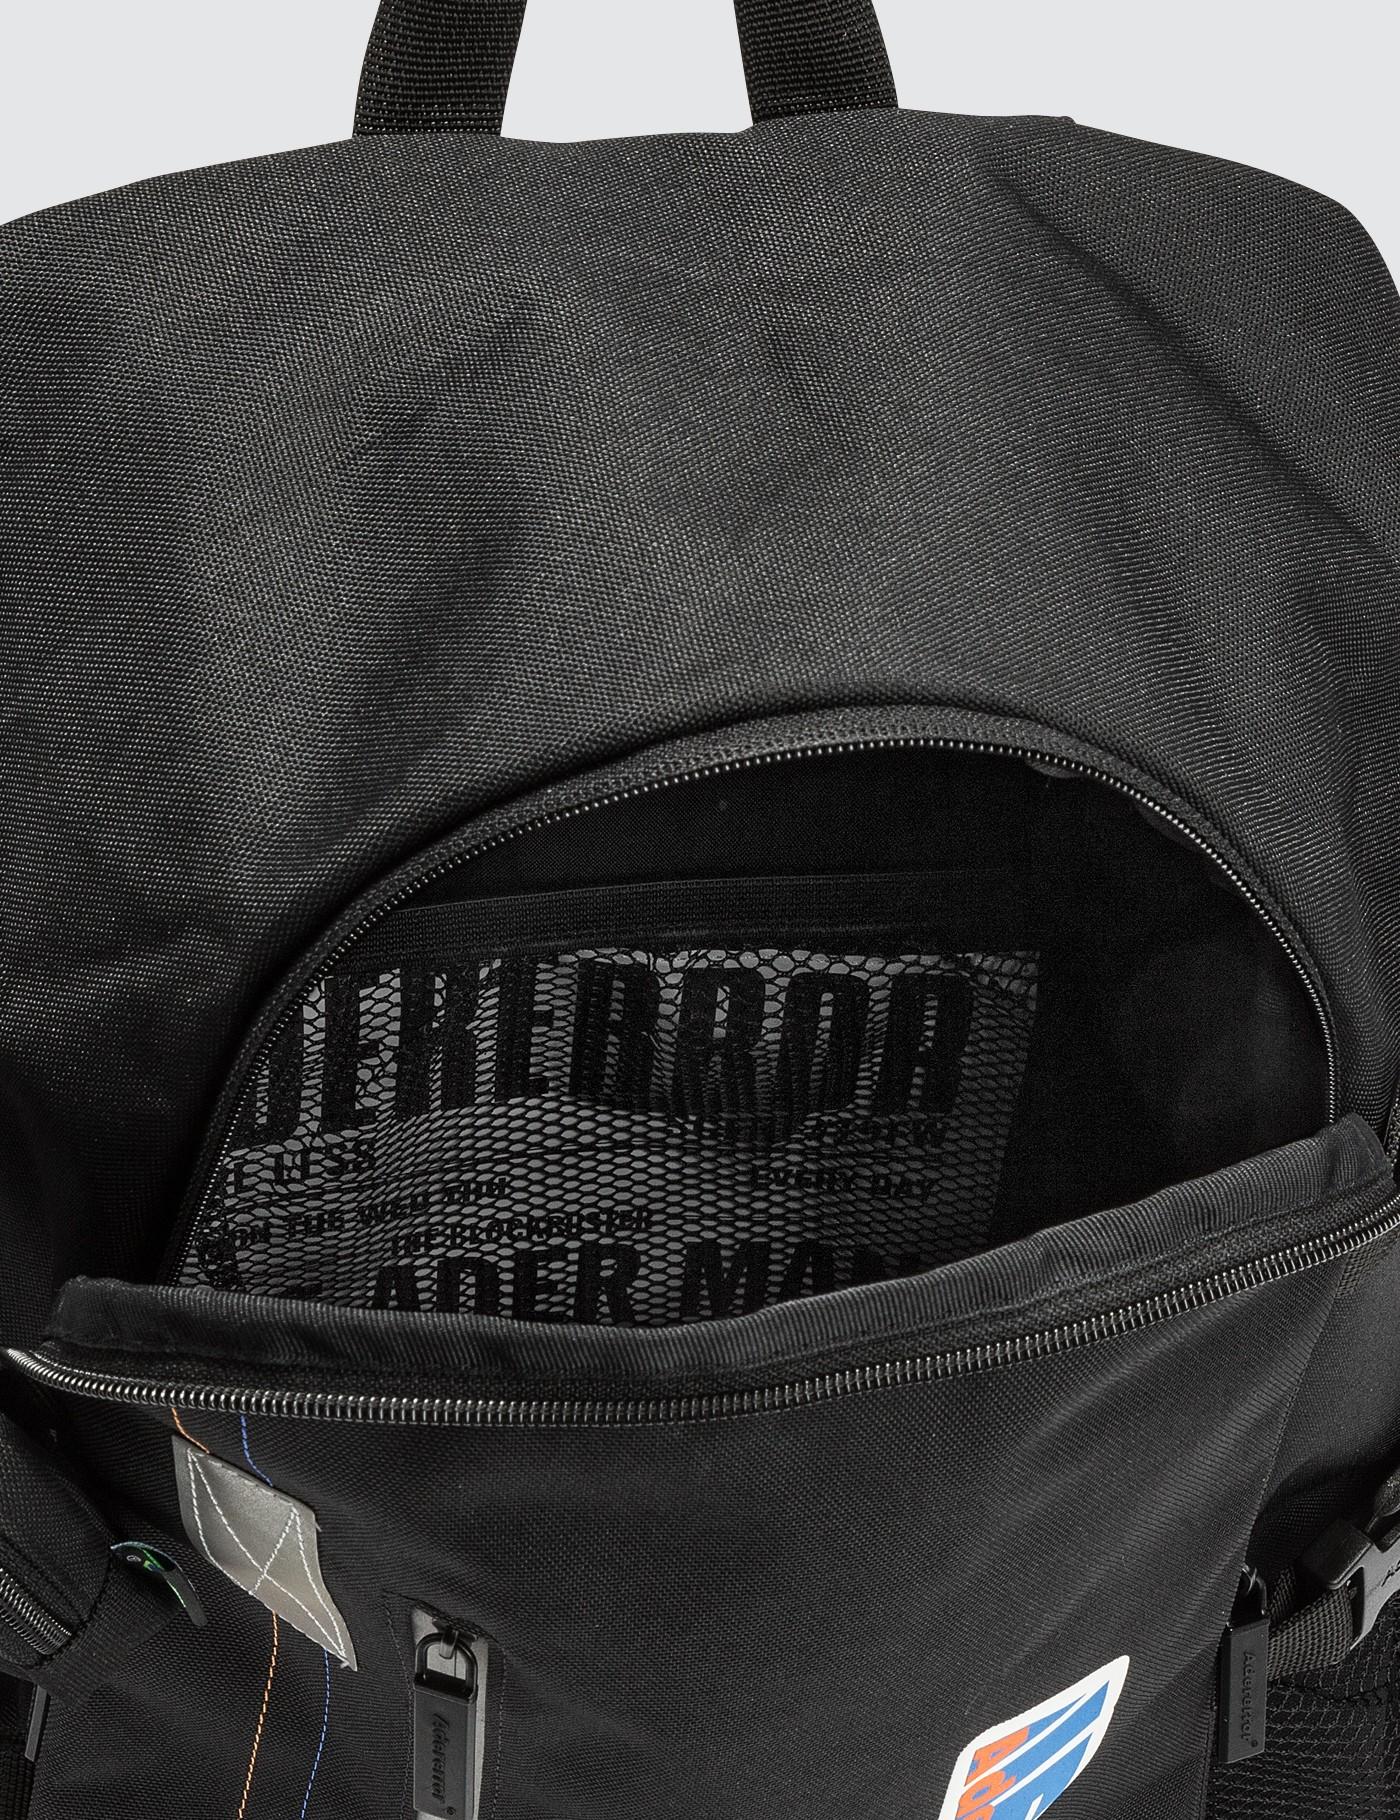 ADER error Agent Tech Backpack in Black for Men - Lyst